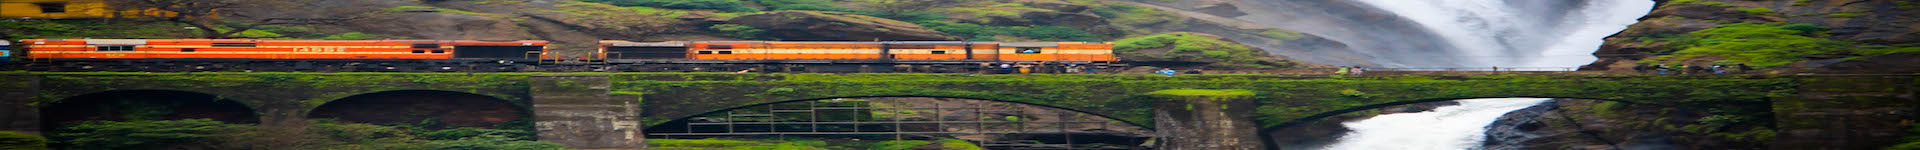 Railways in India